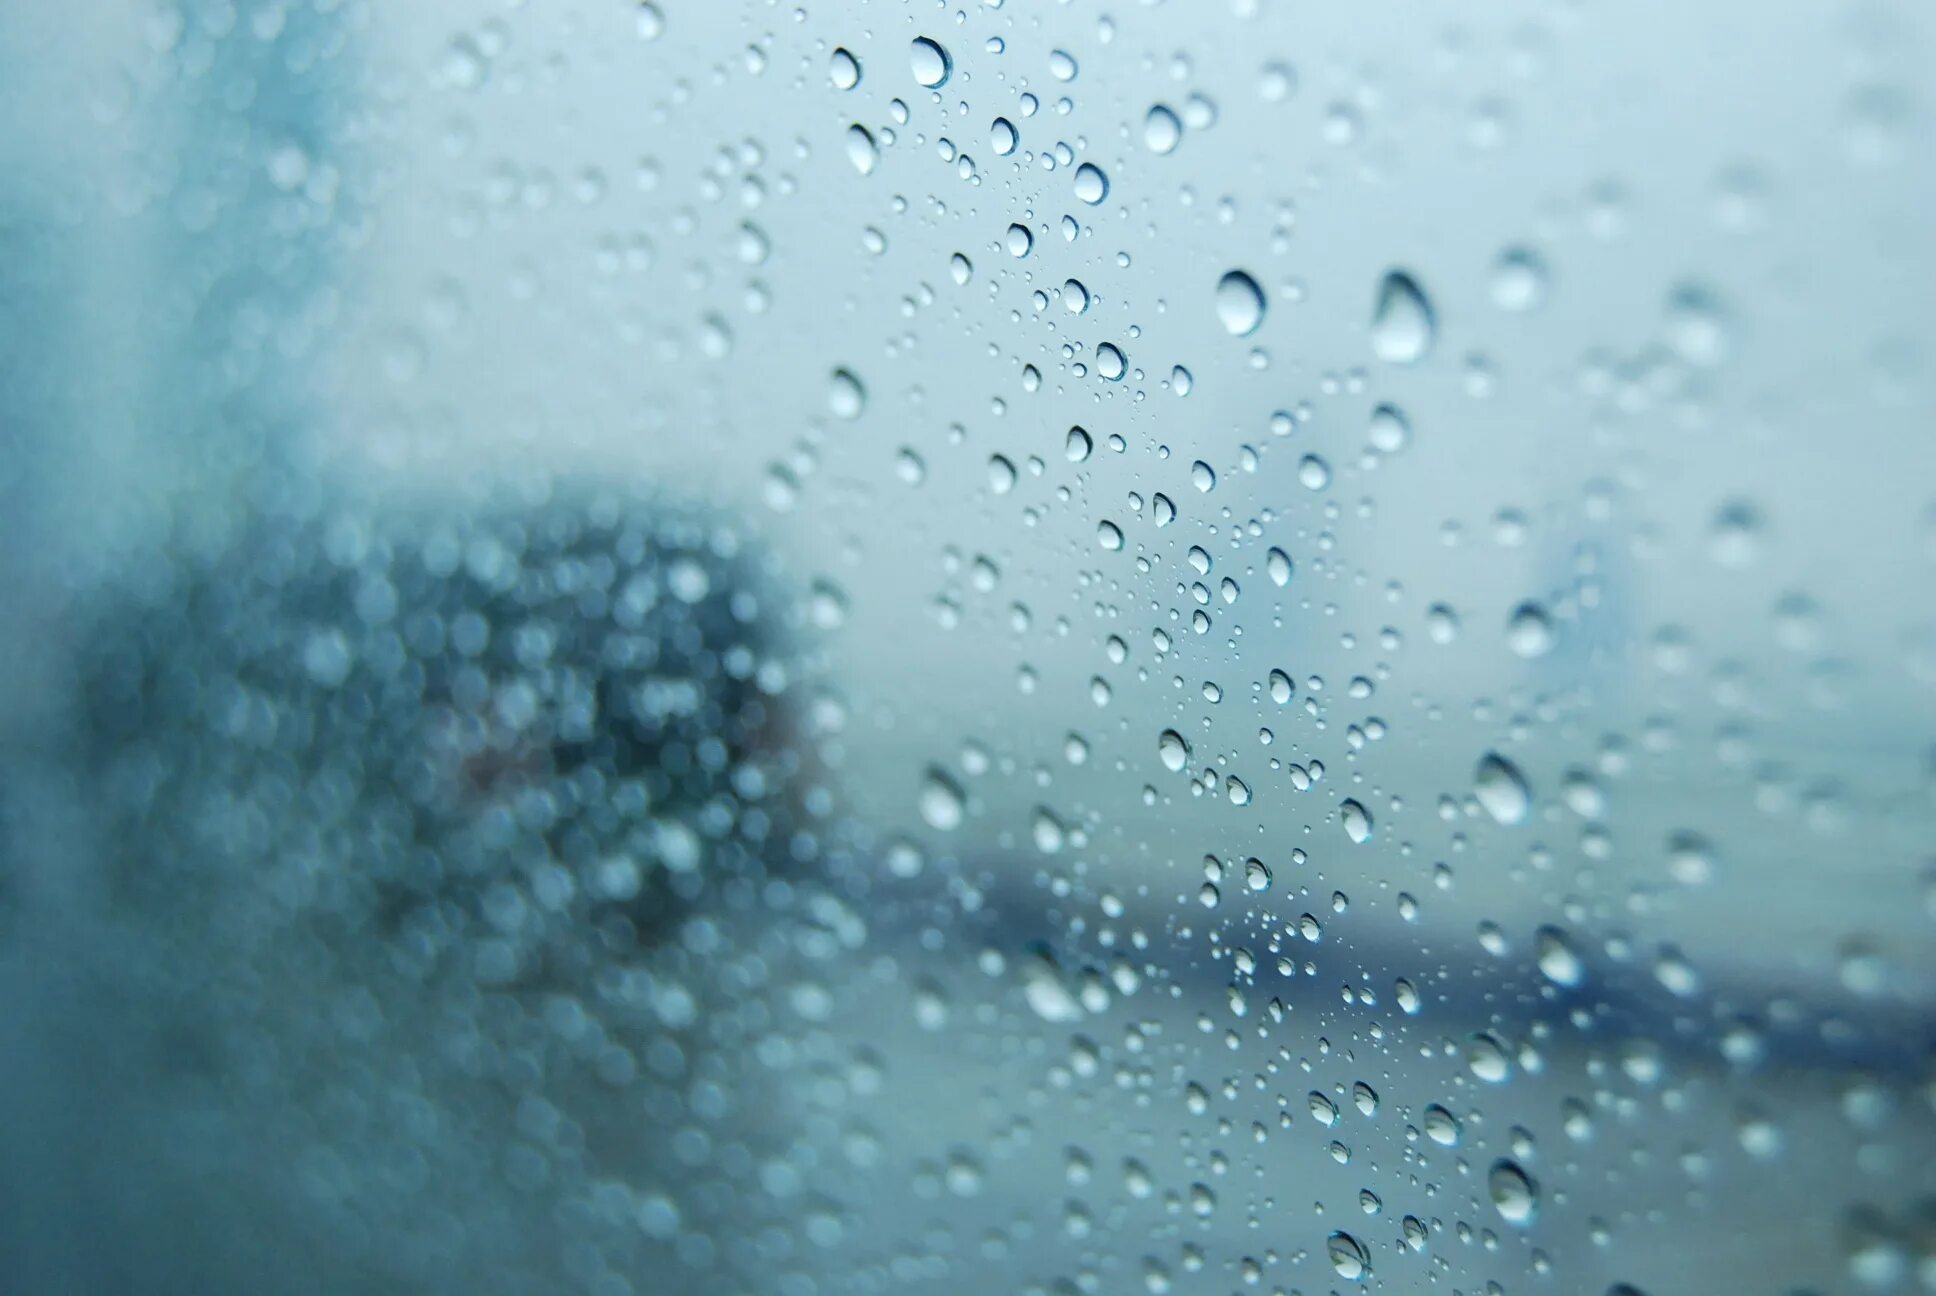 1 крупные капли дождя. Капли на стекле. Капельки дождя. Капельки дождя картинки. Капли дождя на окне.